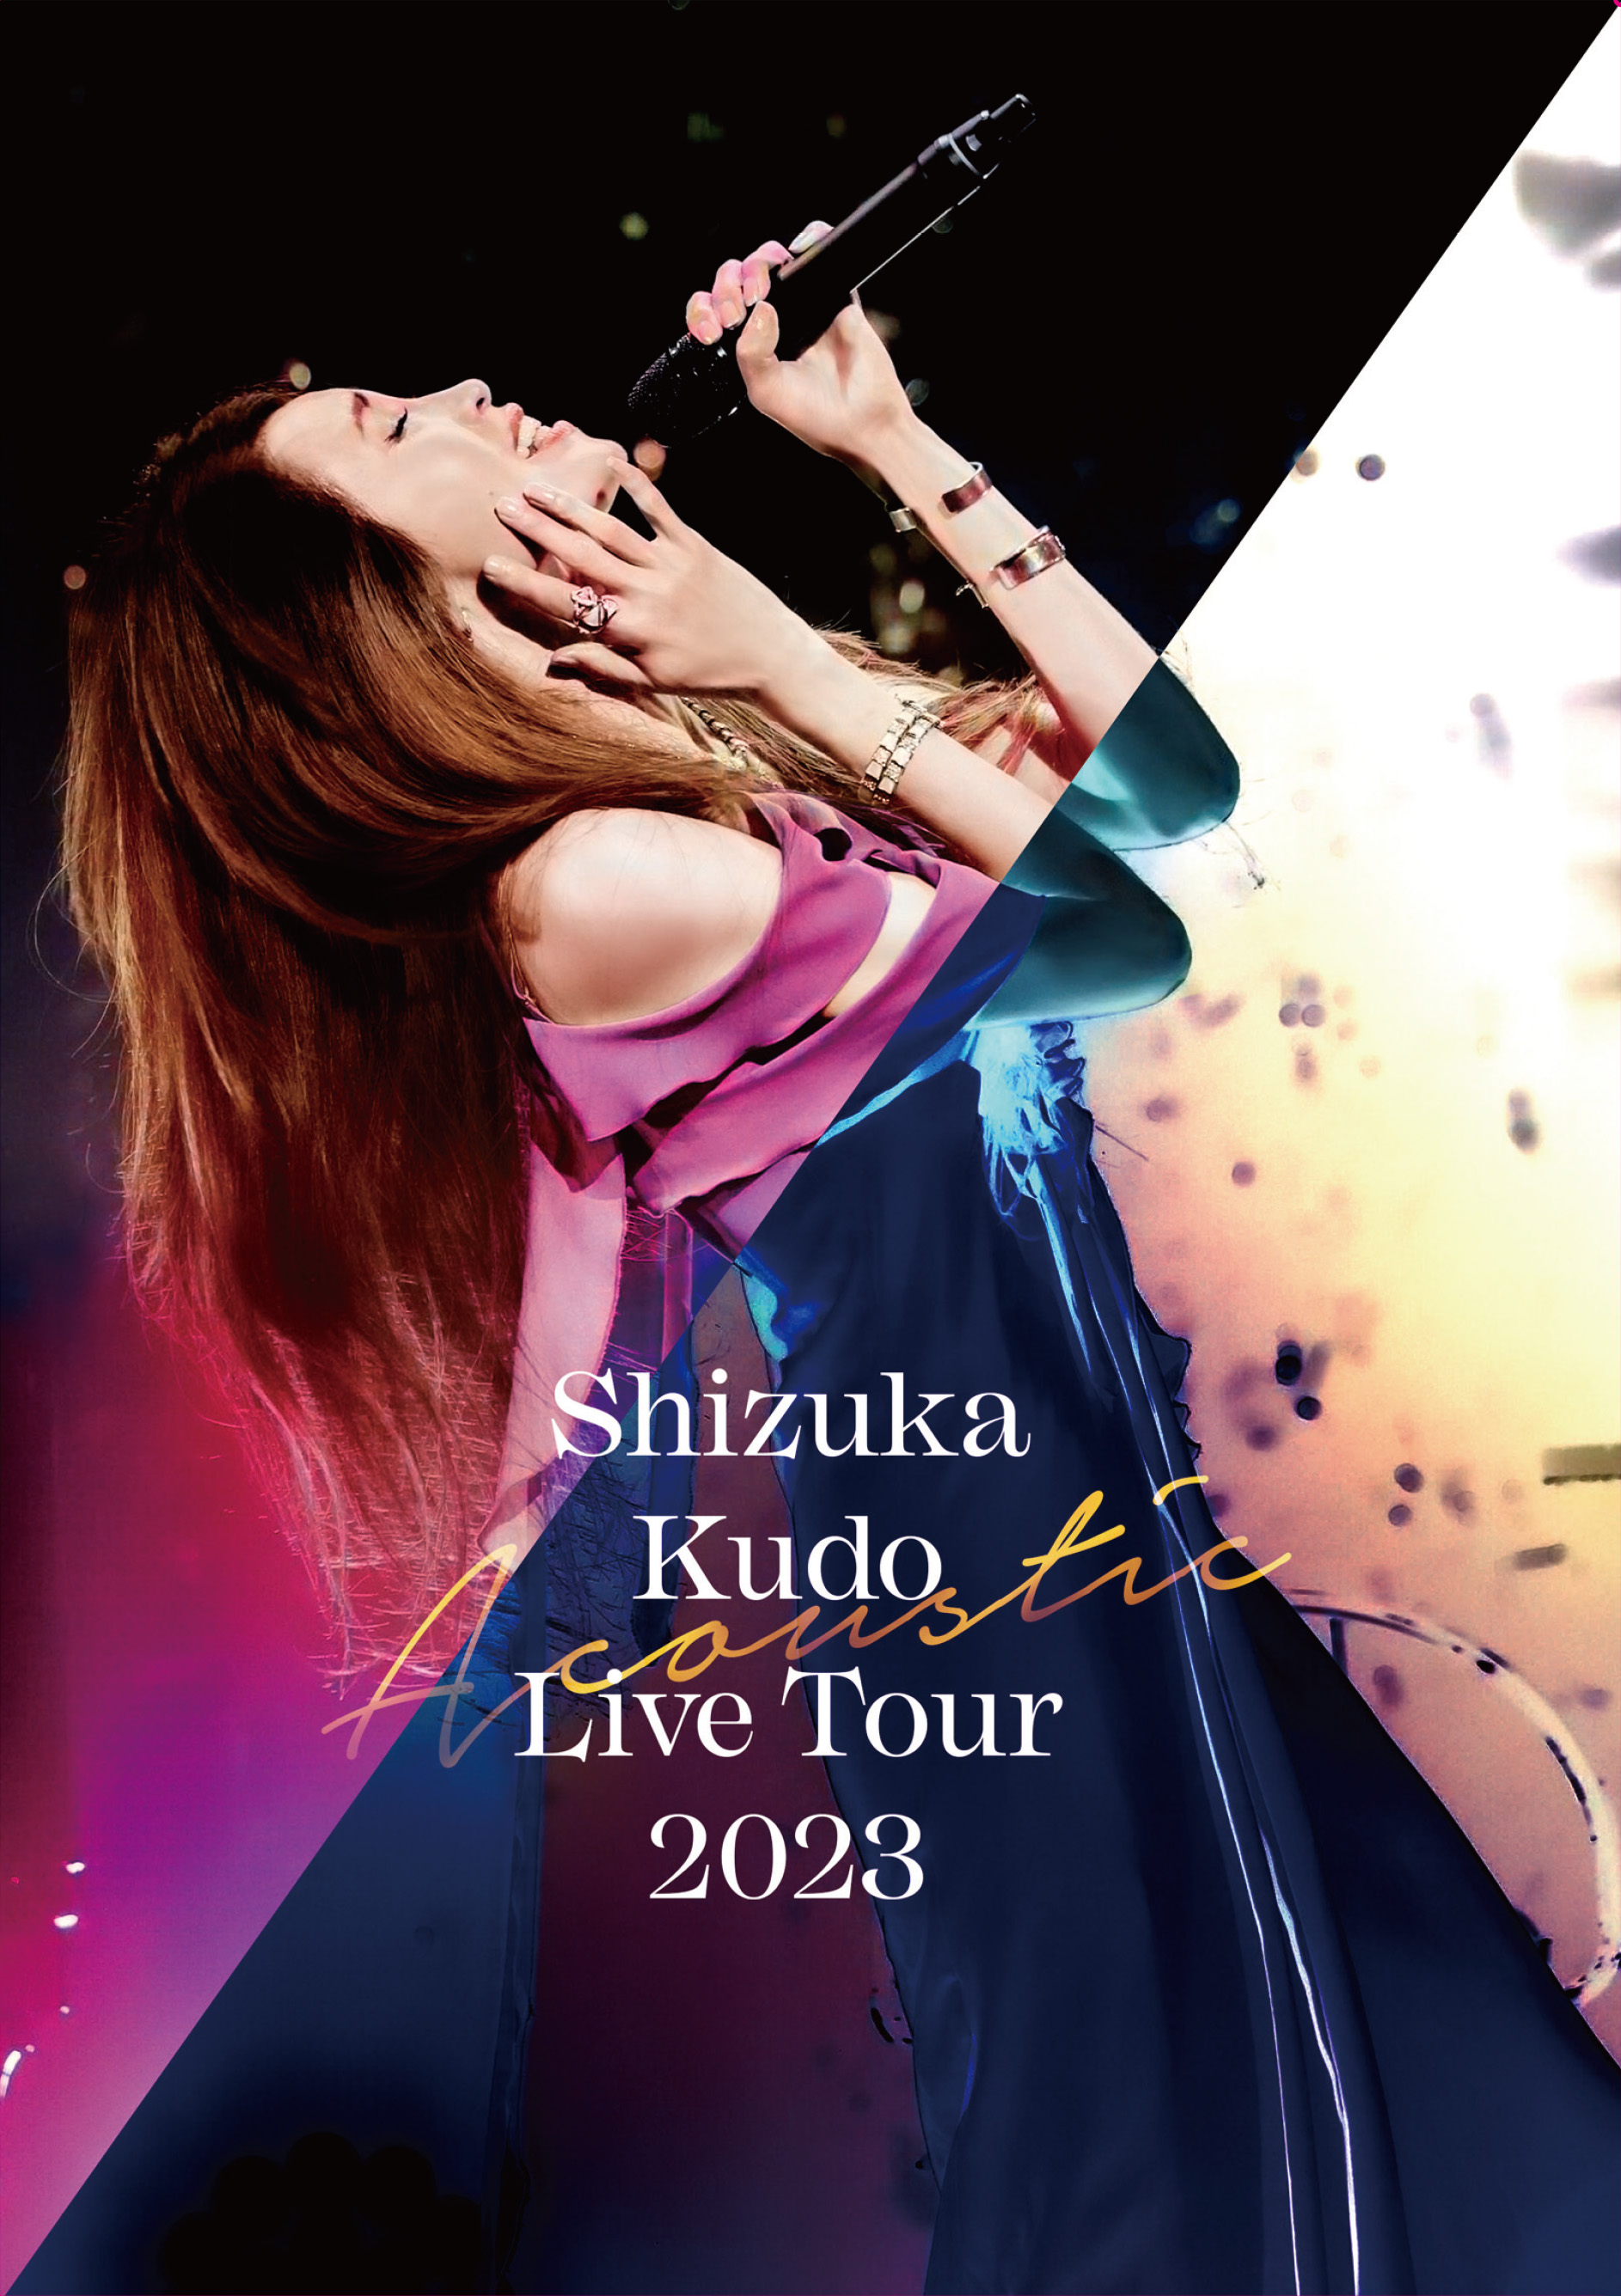 「Shizuka Kudo Acoustic Live Tour 2023」(完全予約生産限定盤)